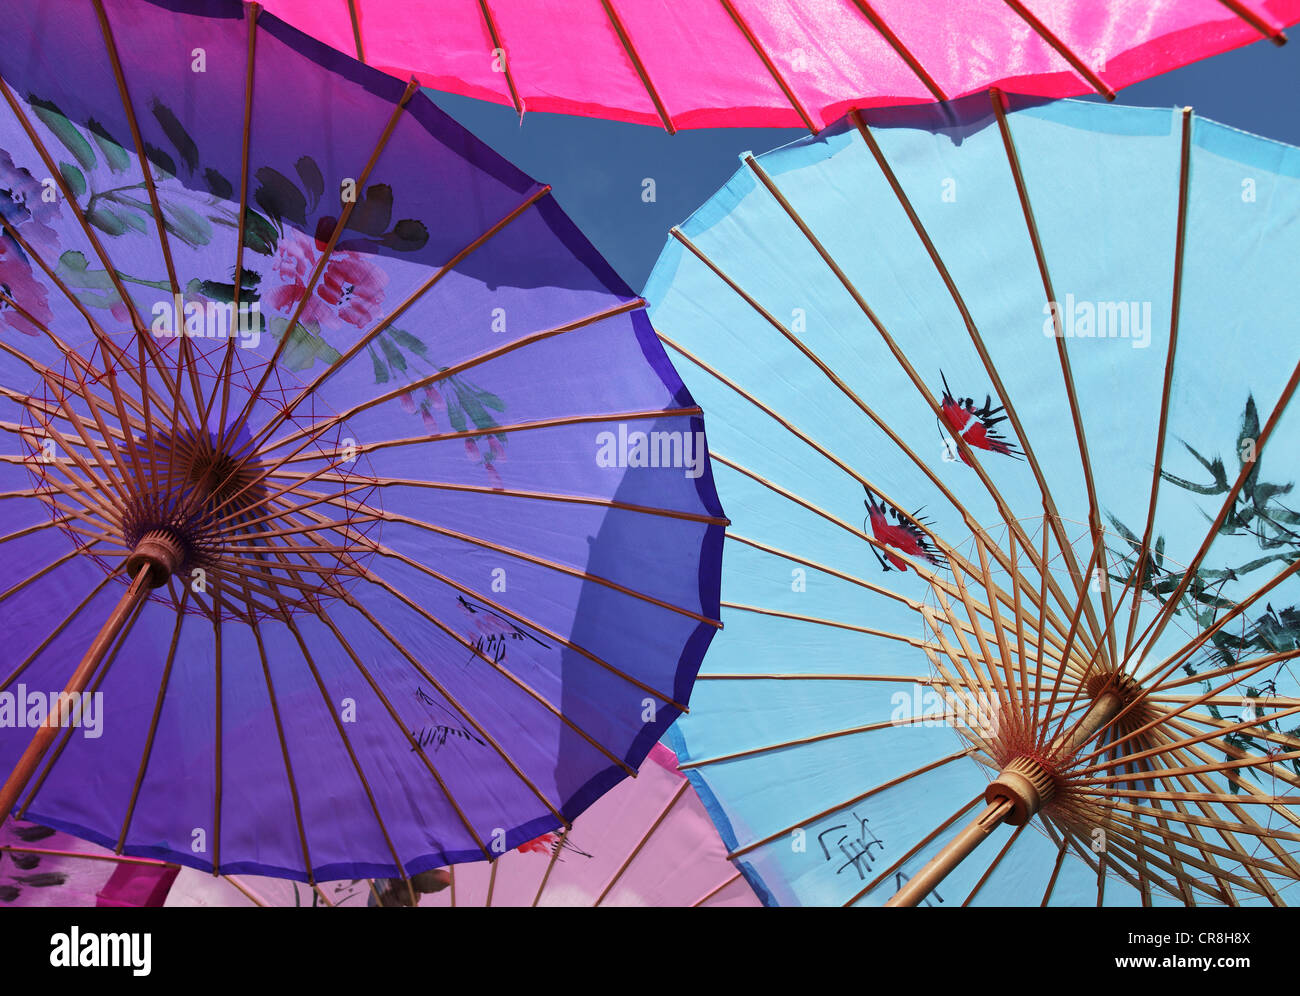 Cinese del parasole Foto stock - Alamy